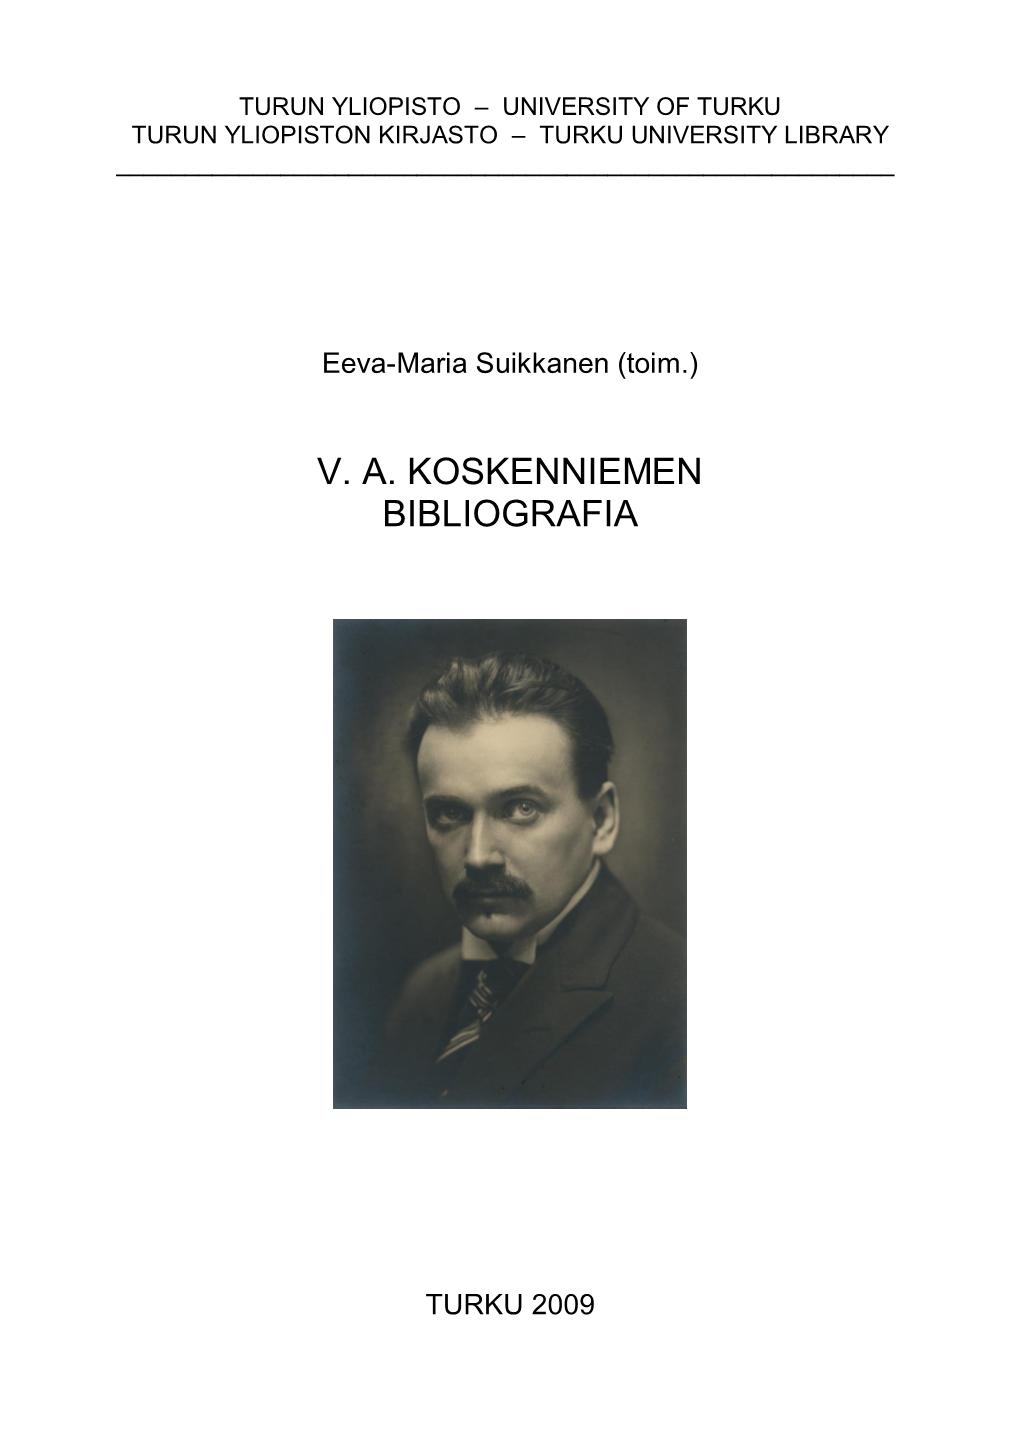 V.A. Koskenniemen Bibliografia ______